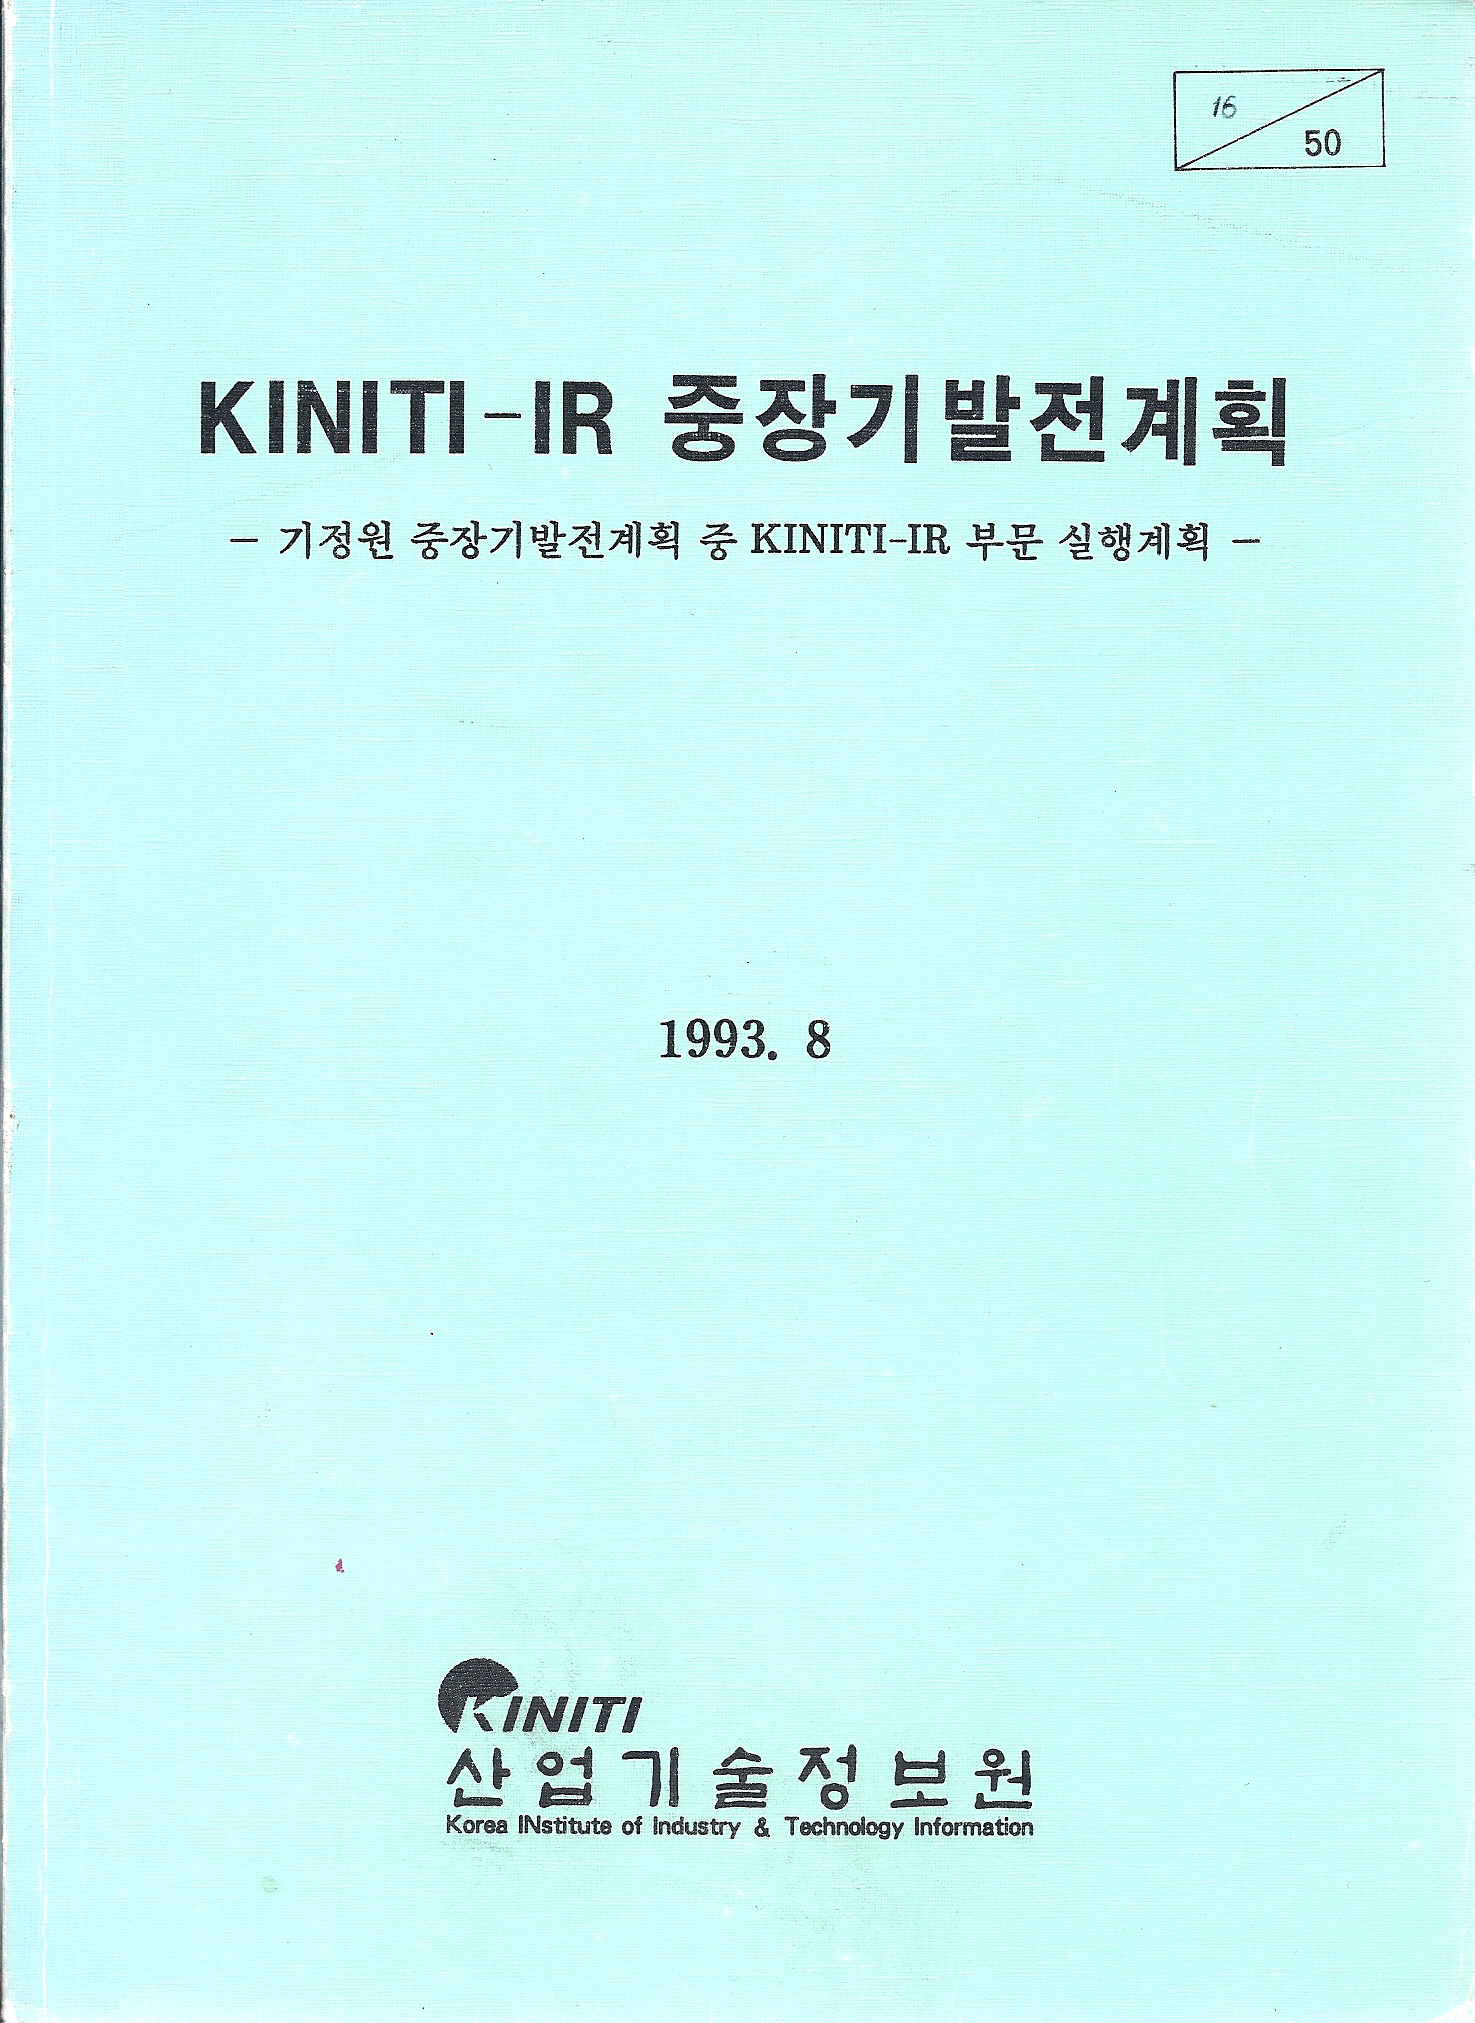 TIMS(MF) System, KINITI-IR 중장기발전계획 등